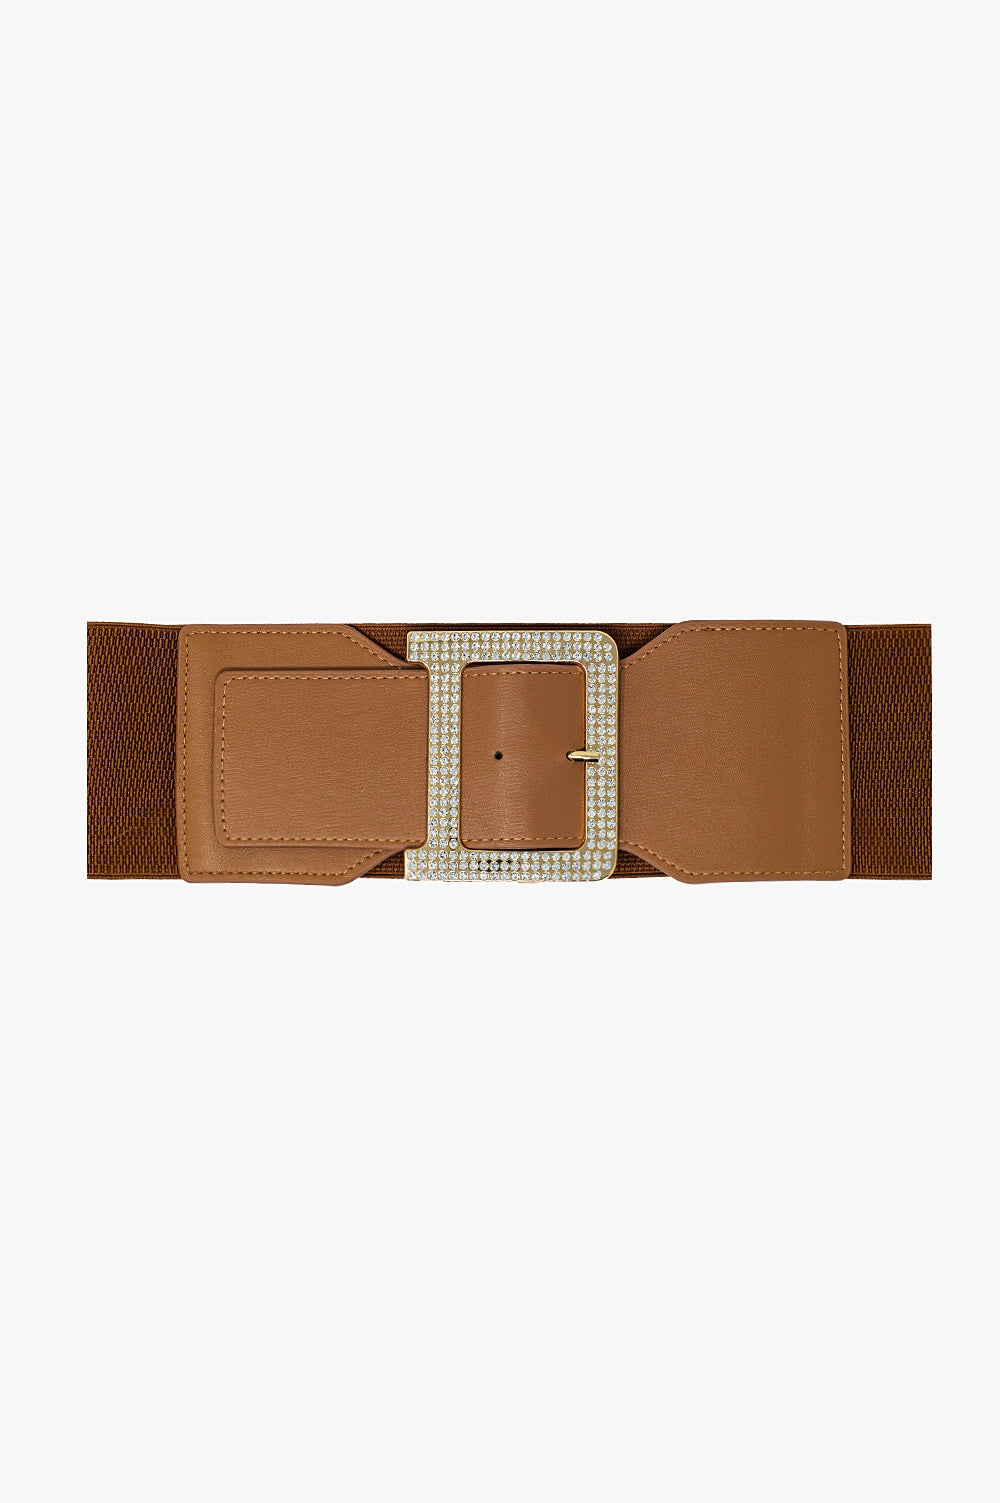 Q2 Wide elastic brown belt with rhinestone details